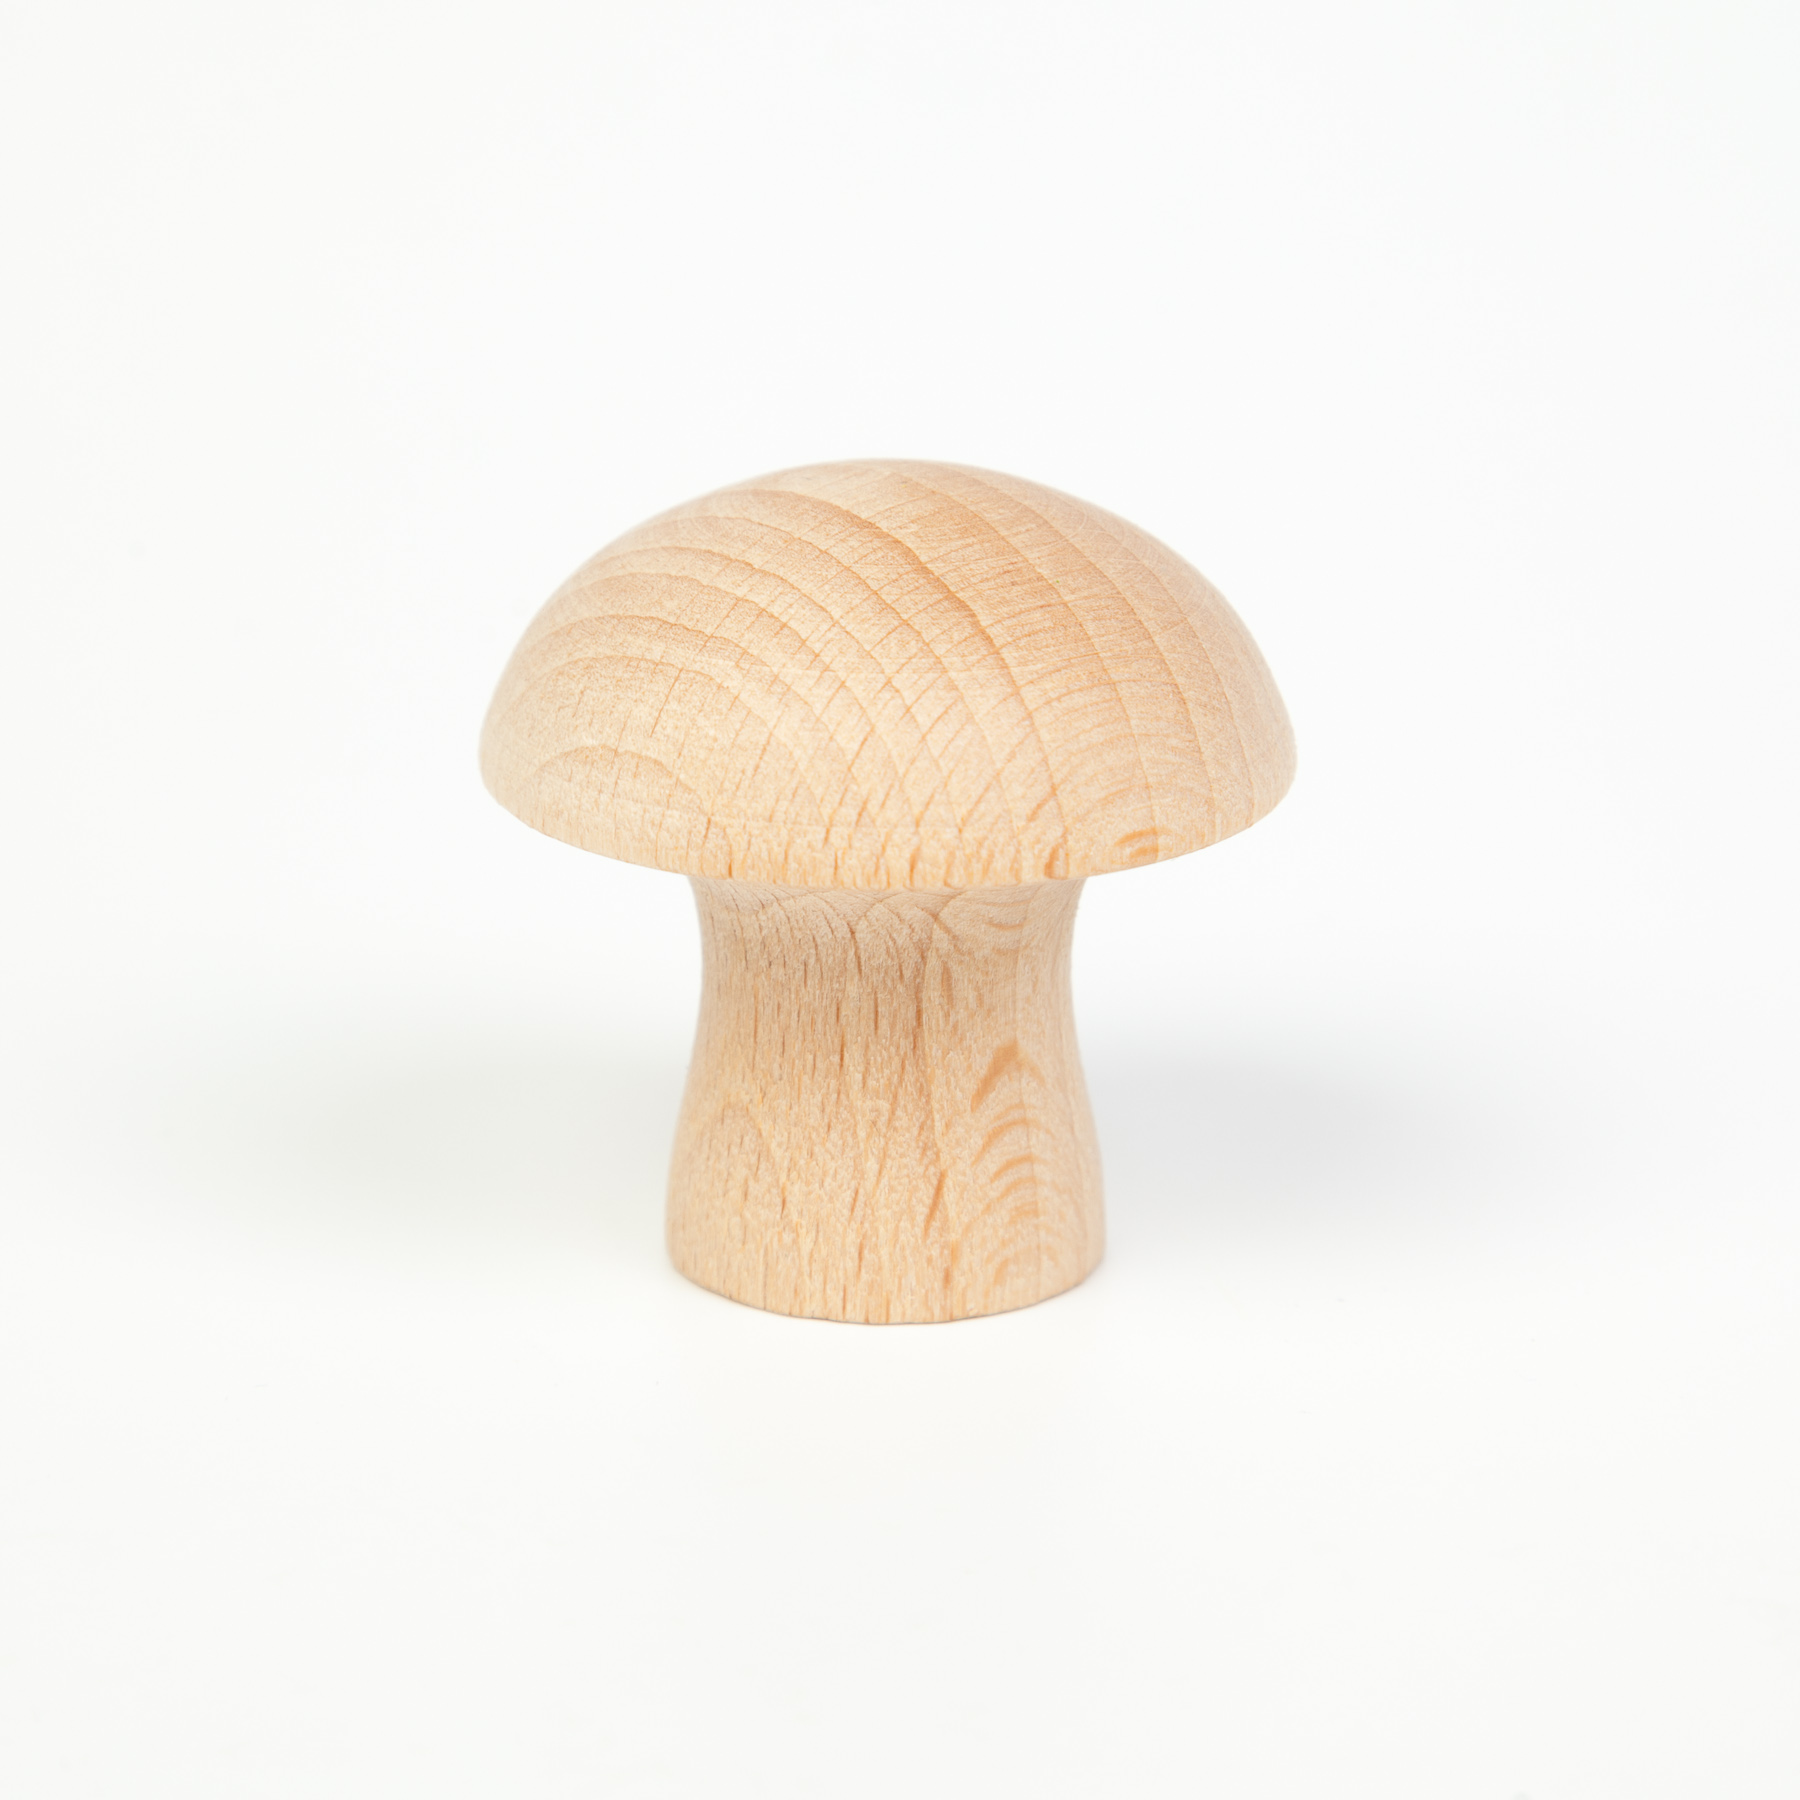 Wood Natural Mushrooms 6 pcs